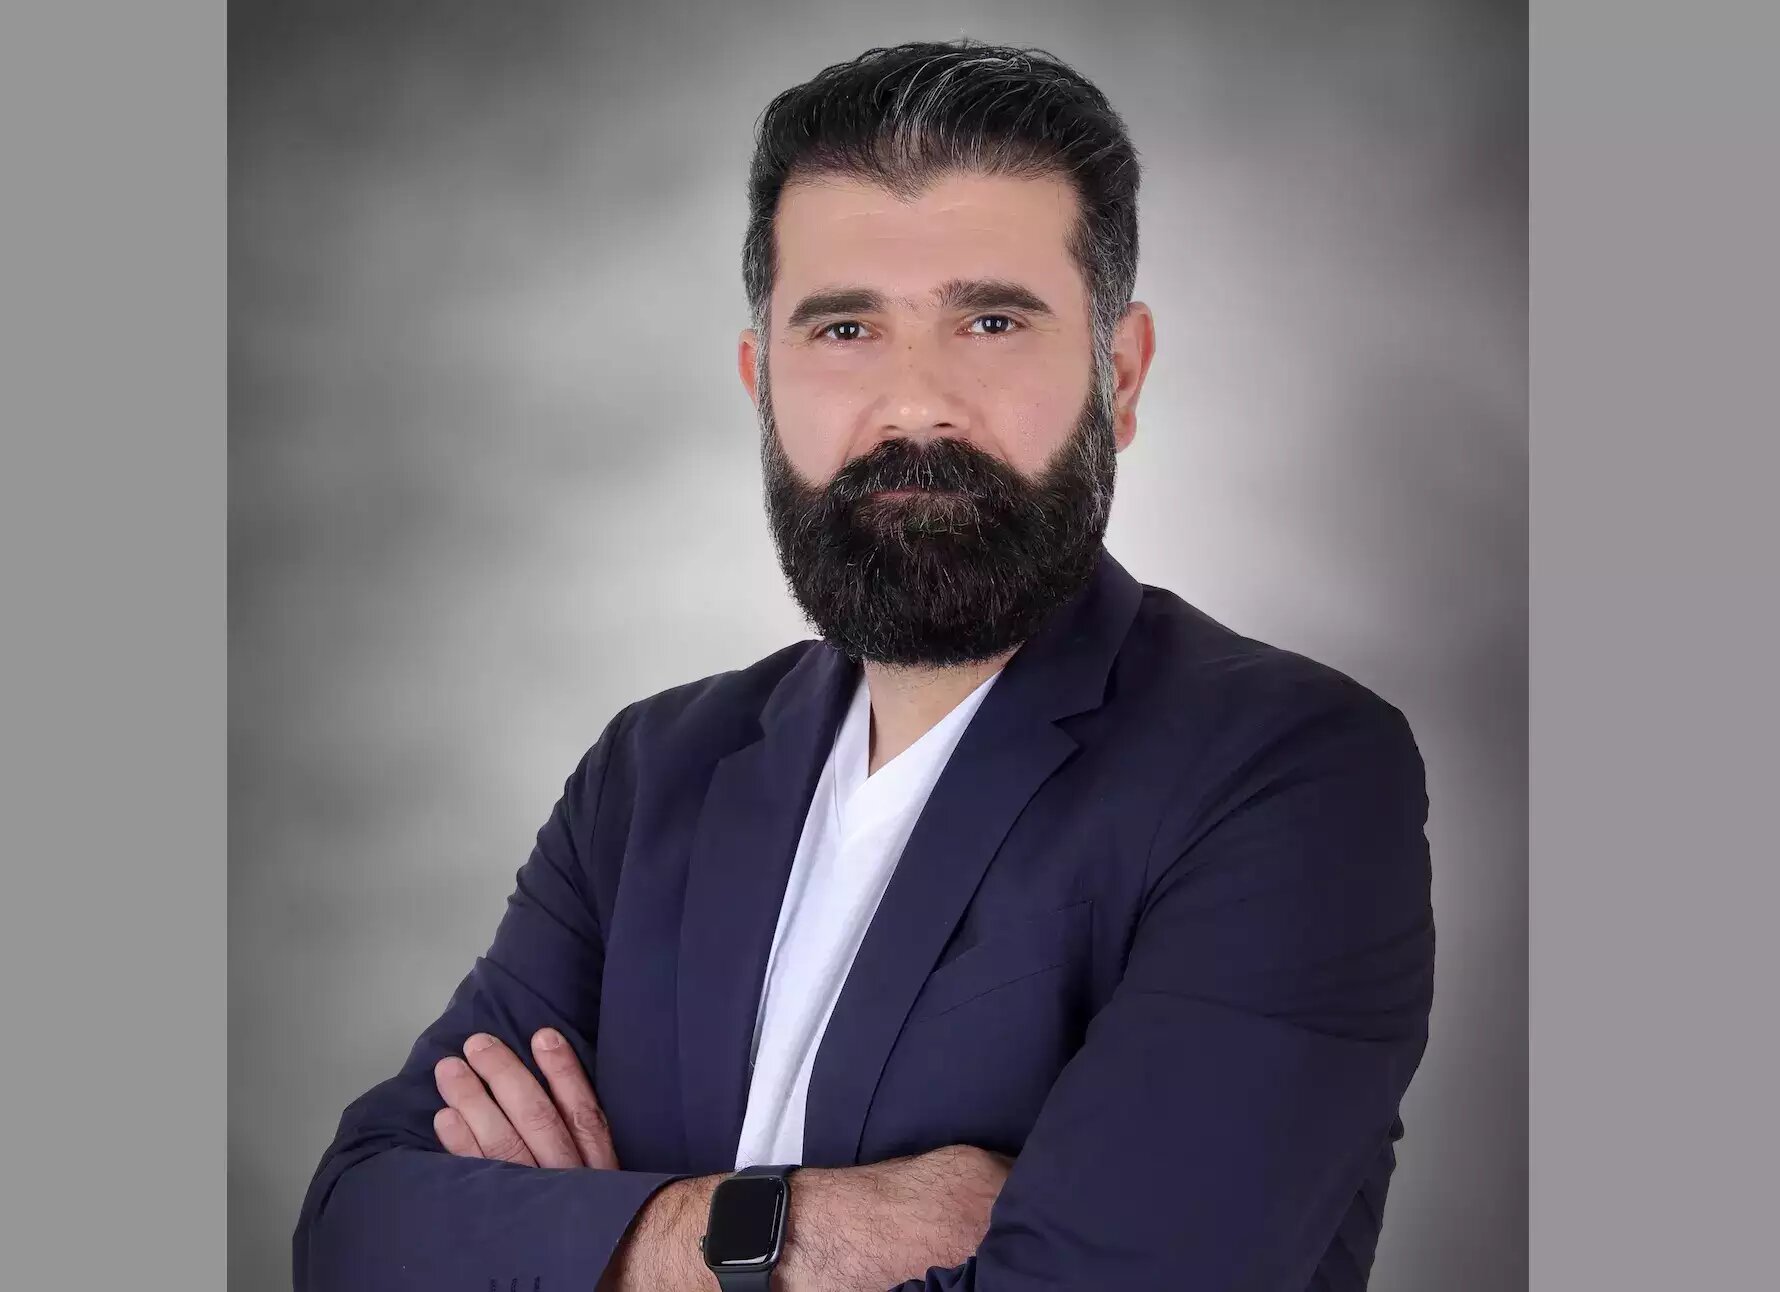 Erick Maalouli as business director for Dubai